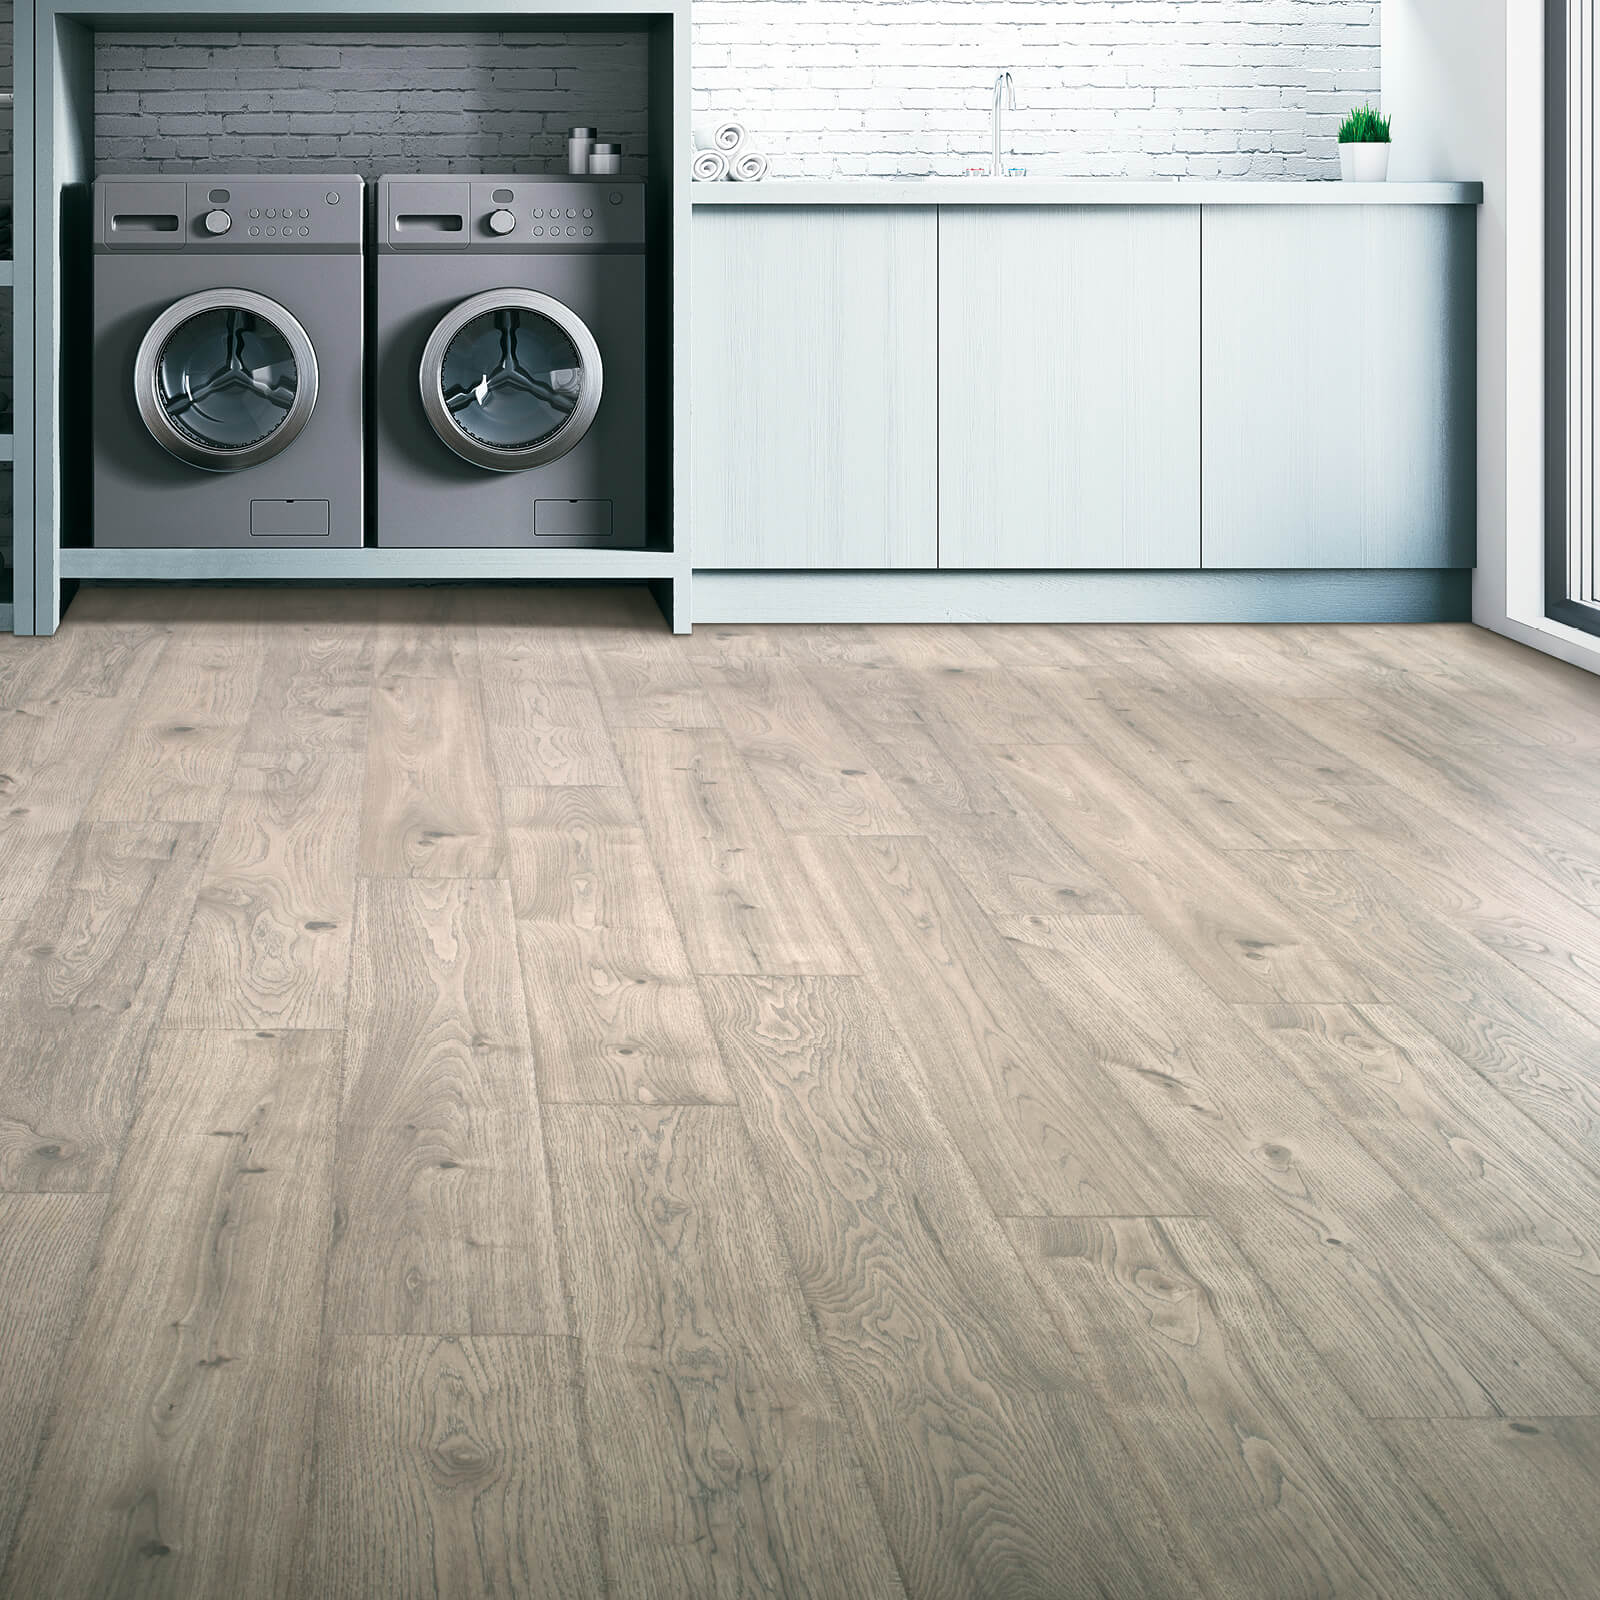 Laundry room Laminate flooring | York Carpetland USA 